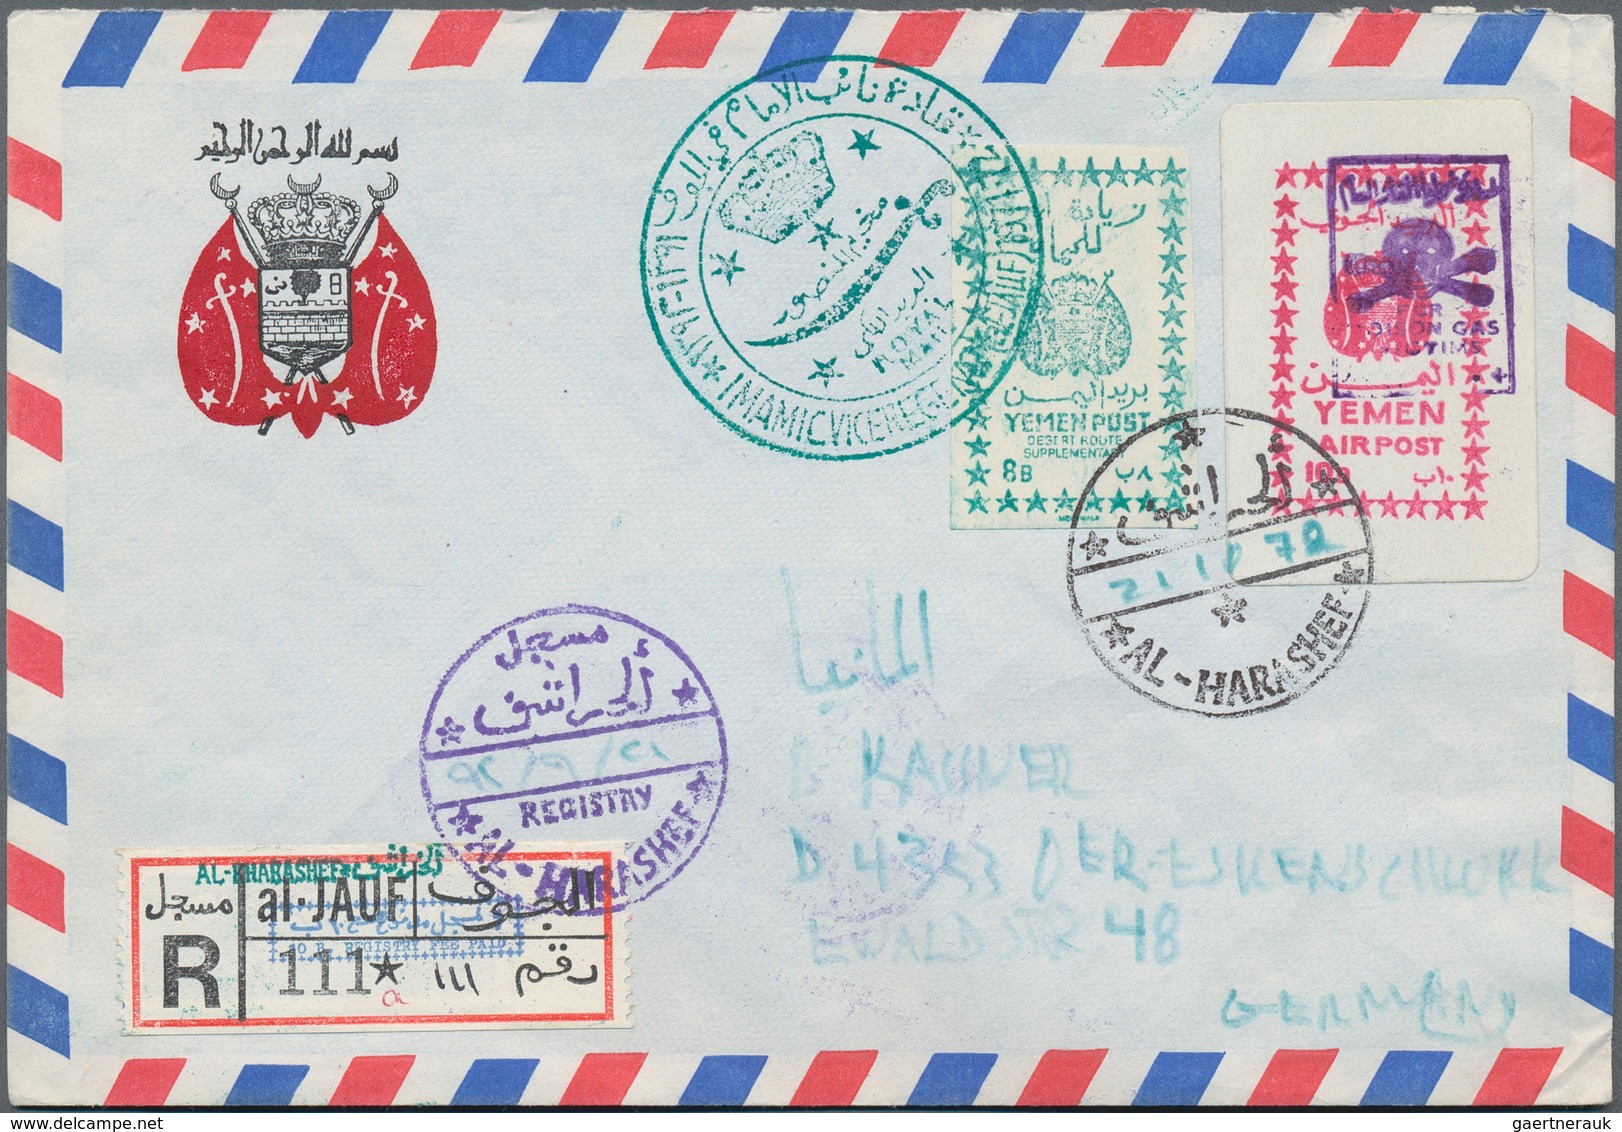 Jemen: 1930/70 (ca.), Kingdom covers (7), FDC (2 inc. 1960 olympics), 6 B. airletter blue cto (2, no